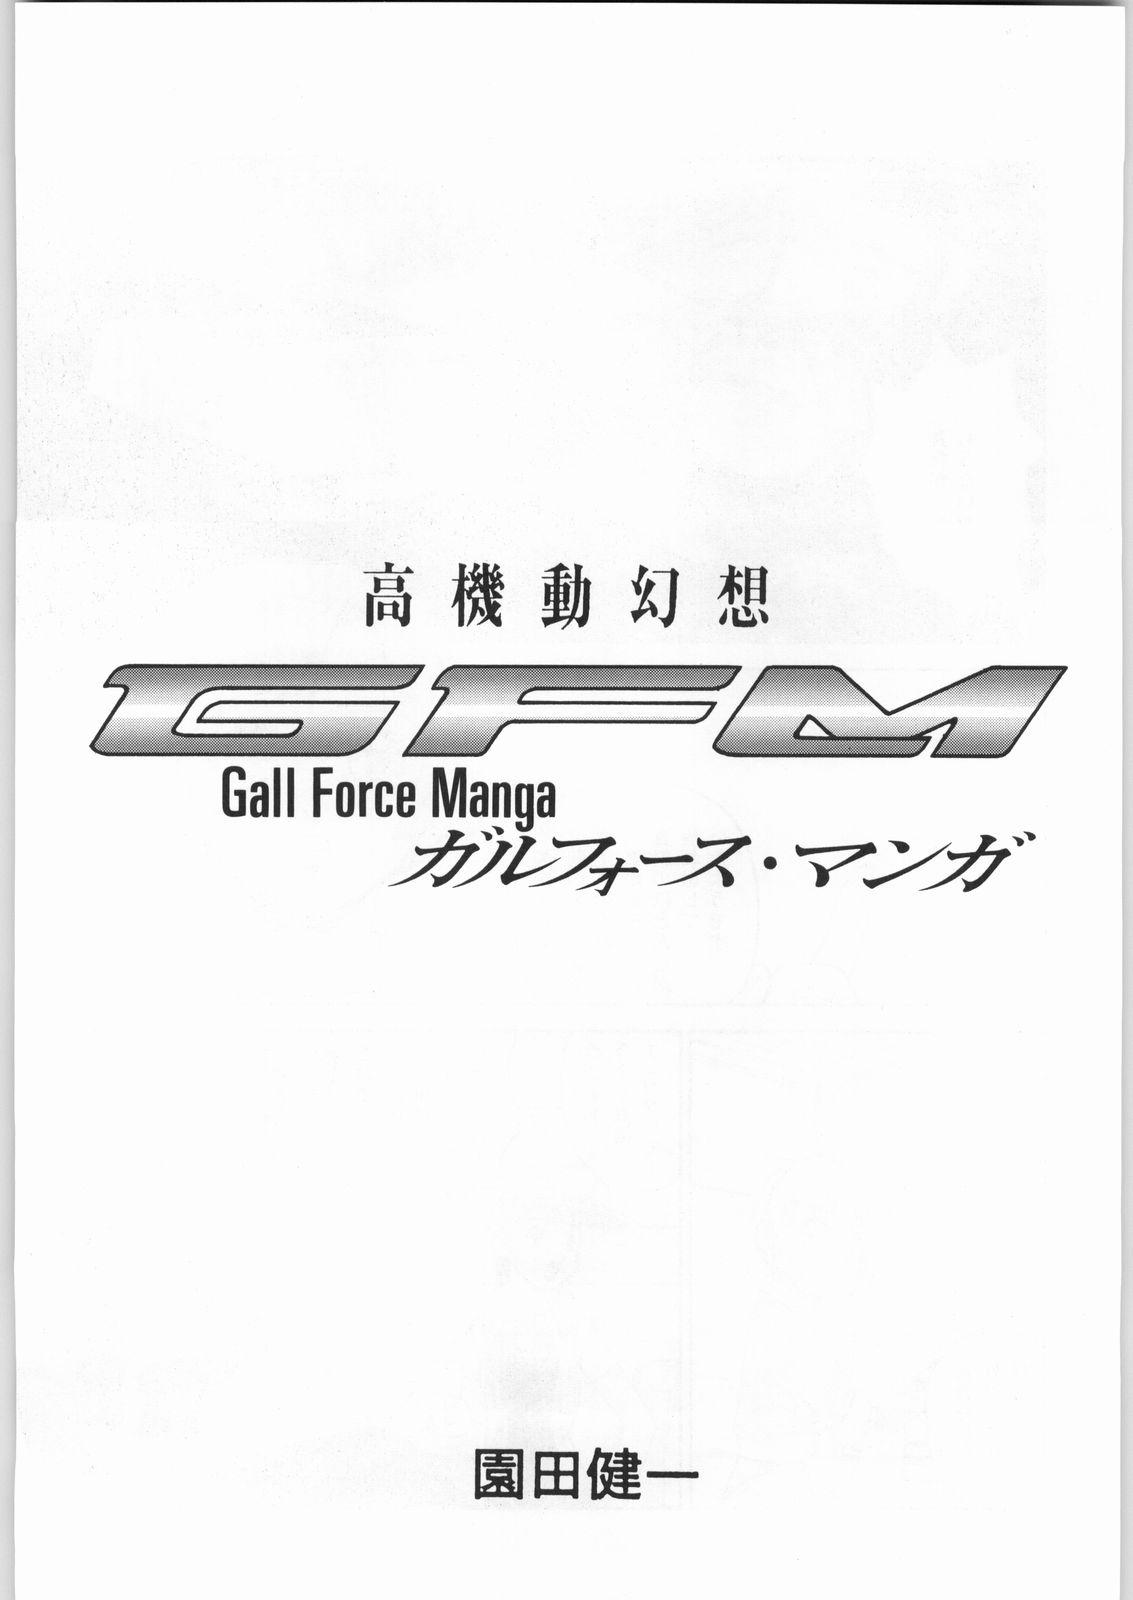 Teenie Chousen Ame Ver.19 - Galaxy angel Gundam Candid - Page 4